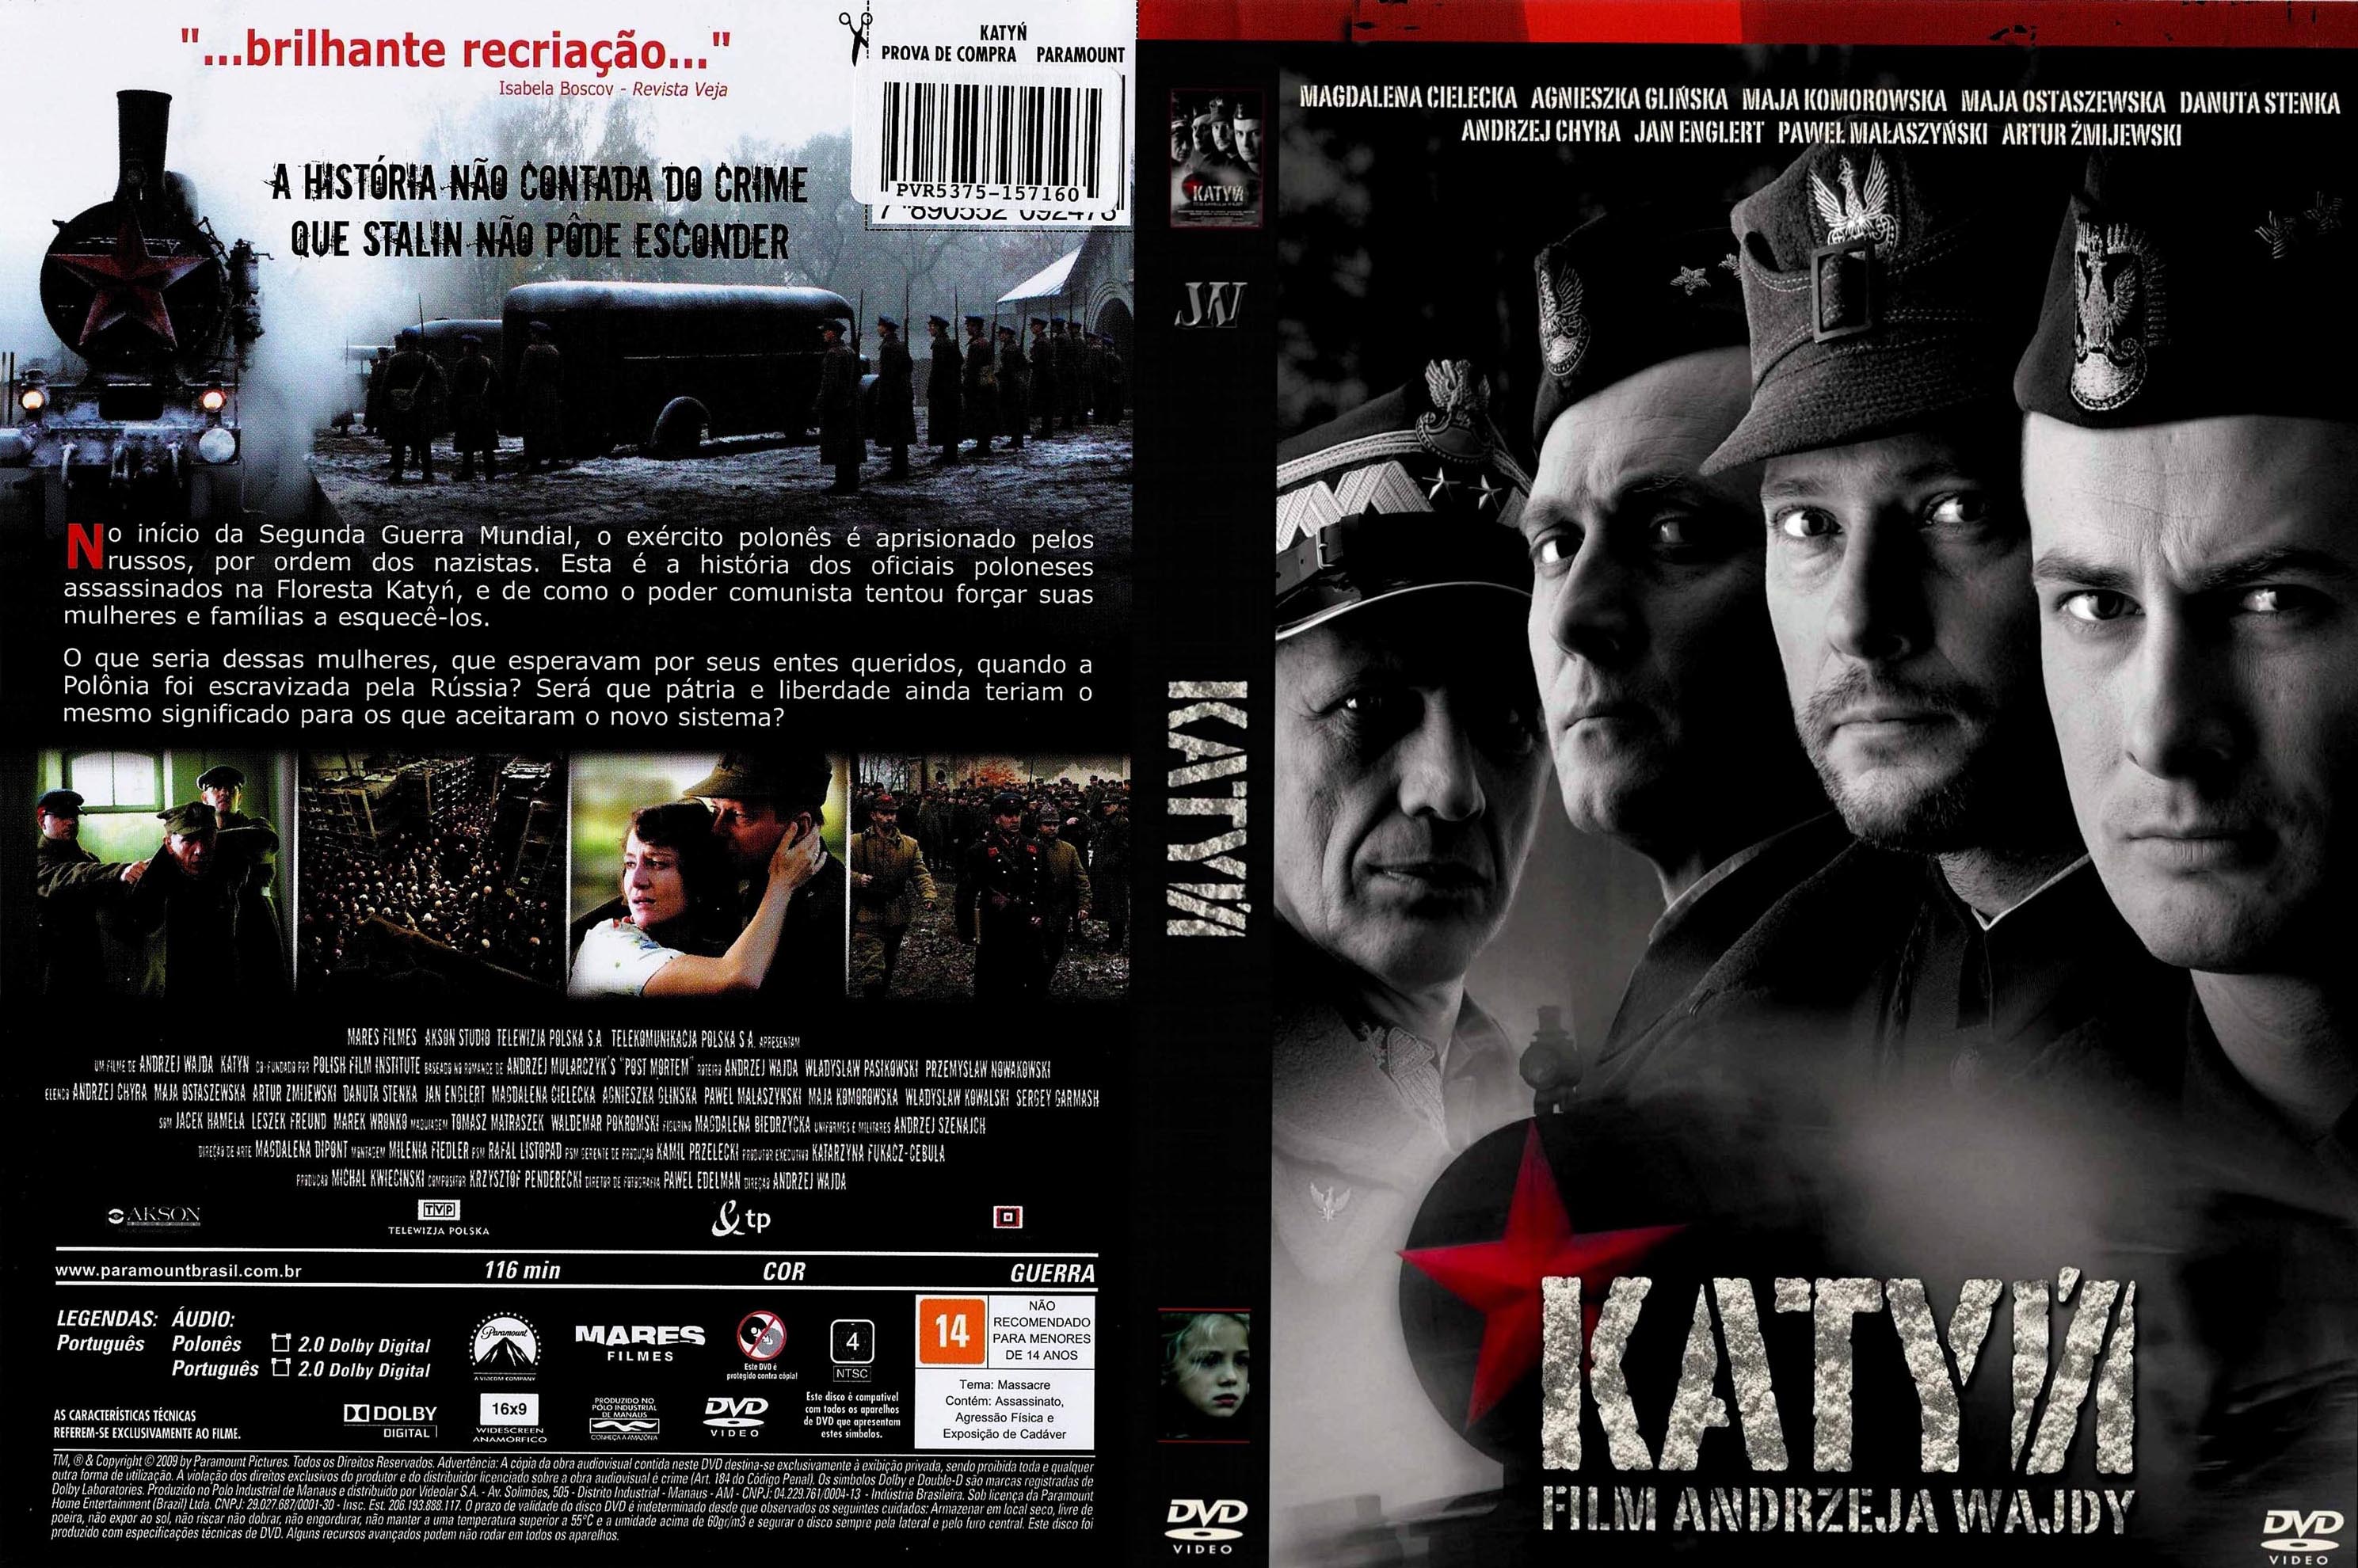 Katyn